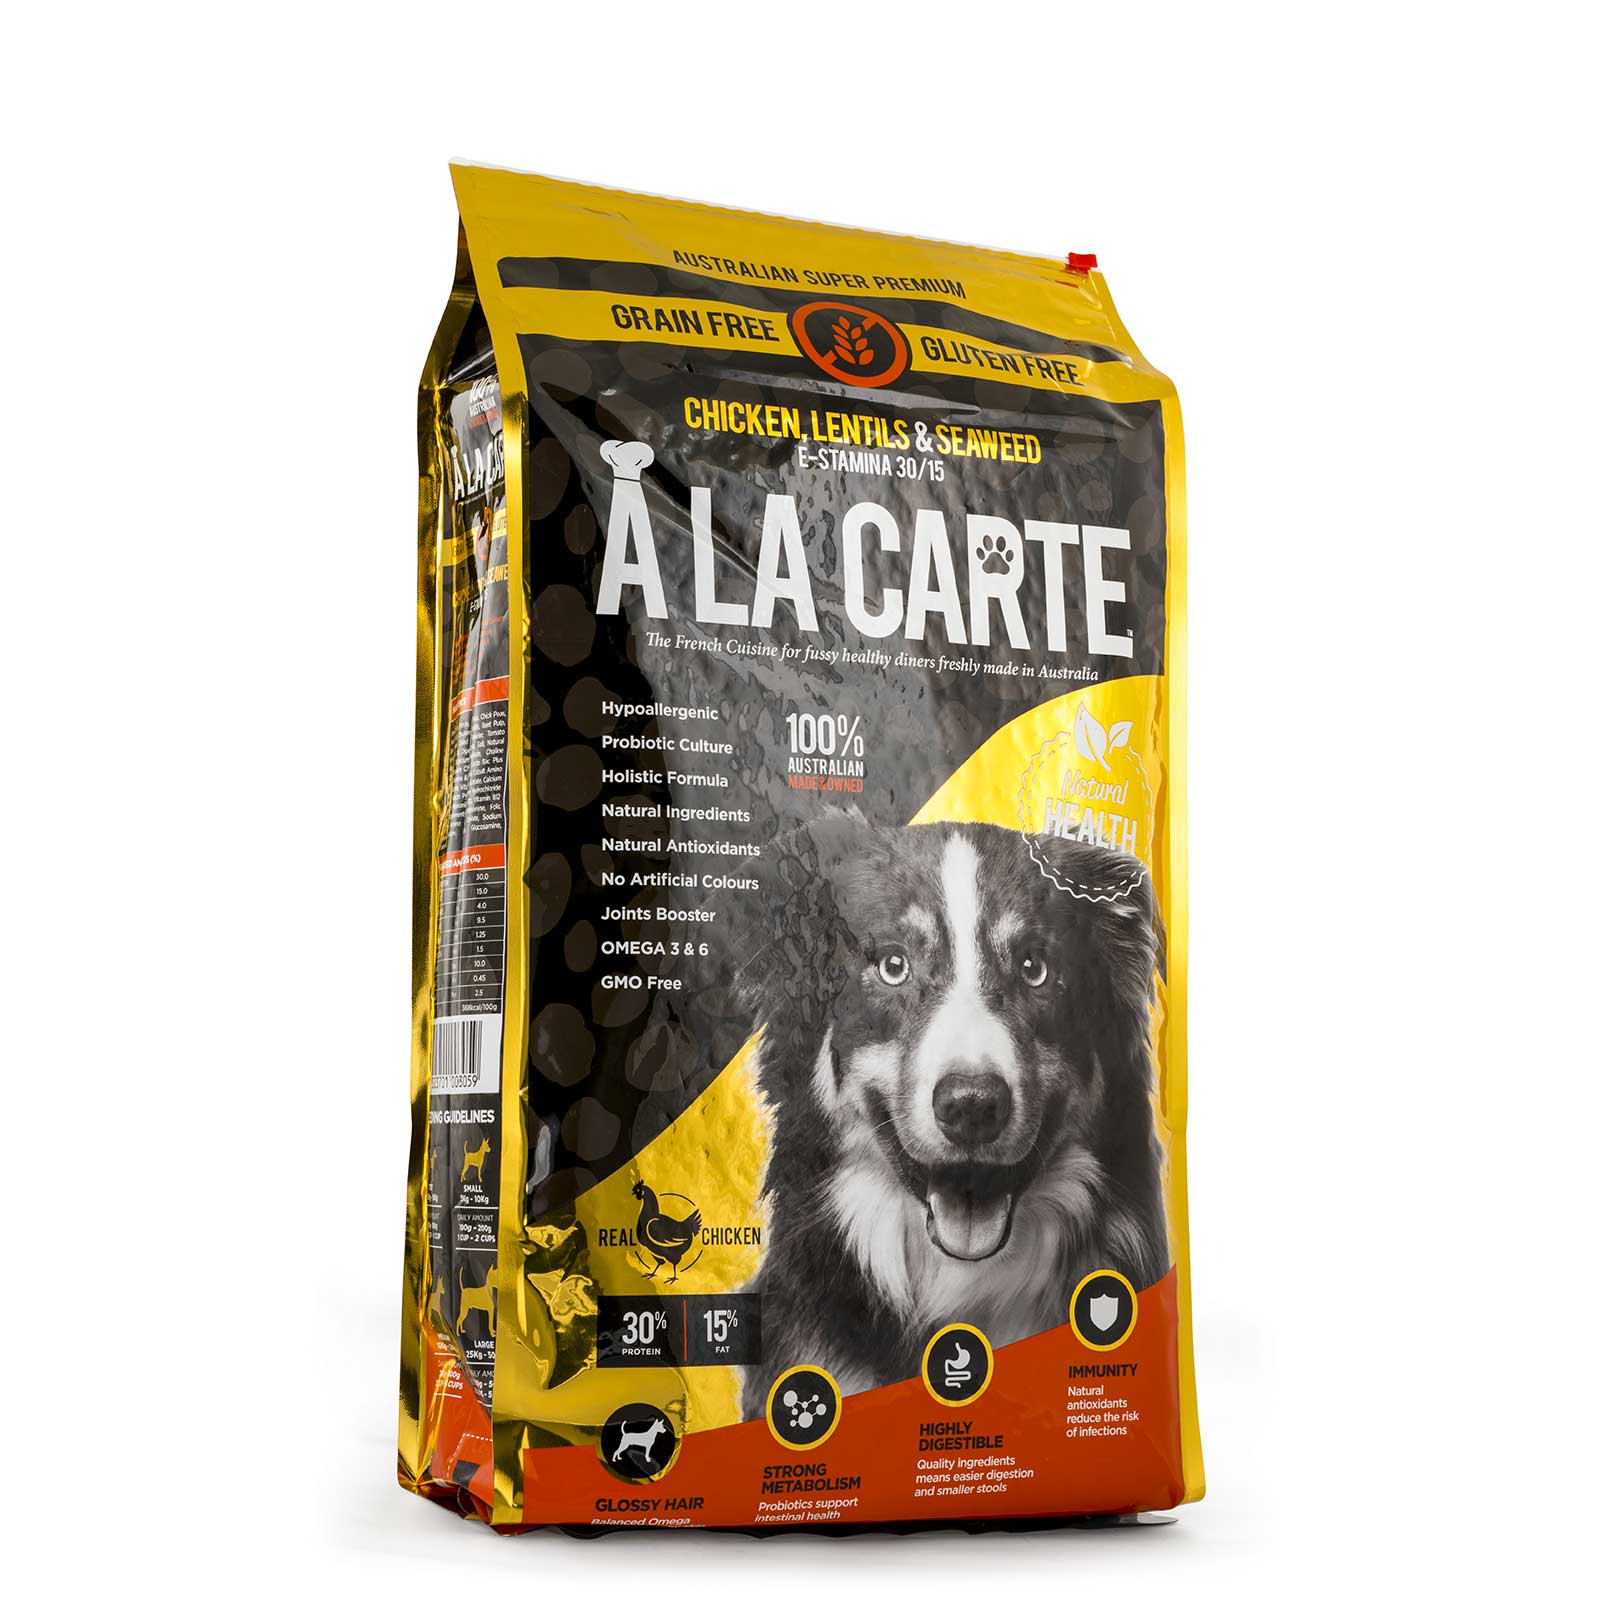 A La Carte Grain Free Dog Food E-Stamina Chicken, Lentils & Seaweed